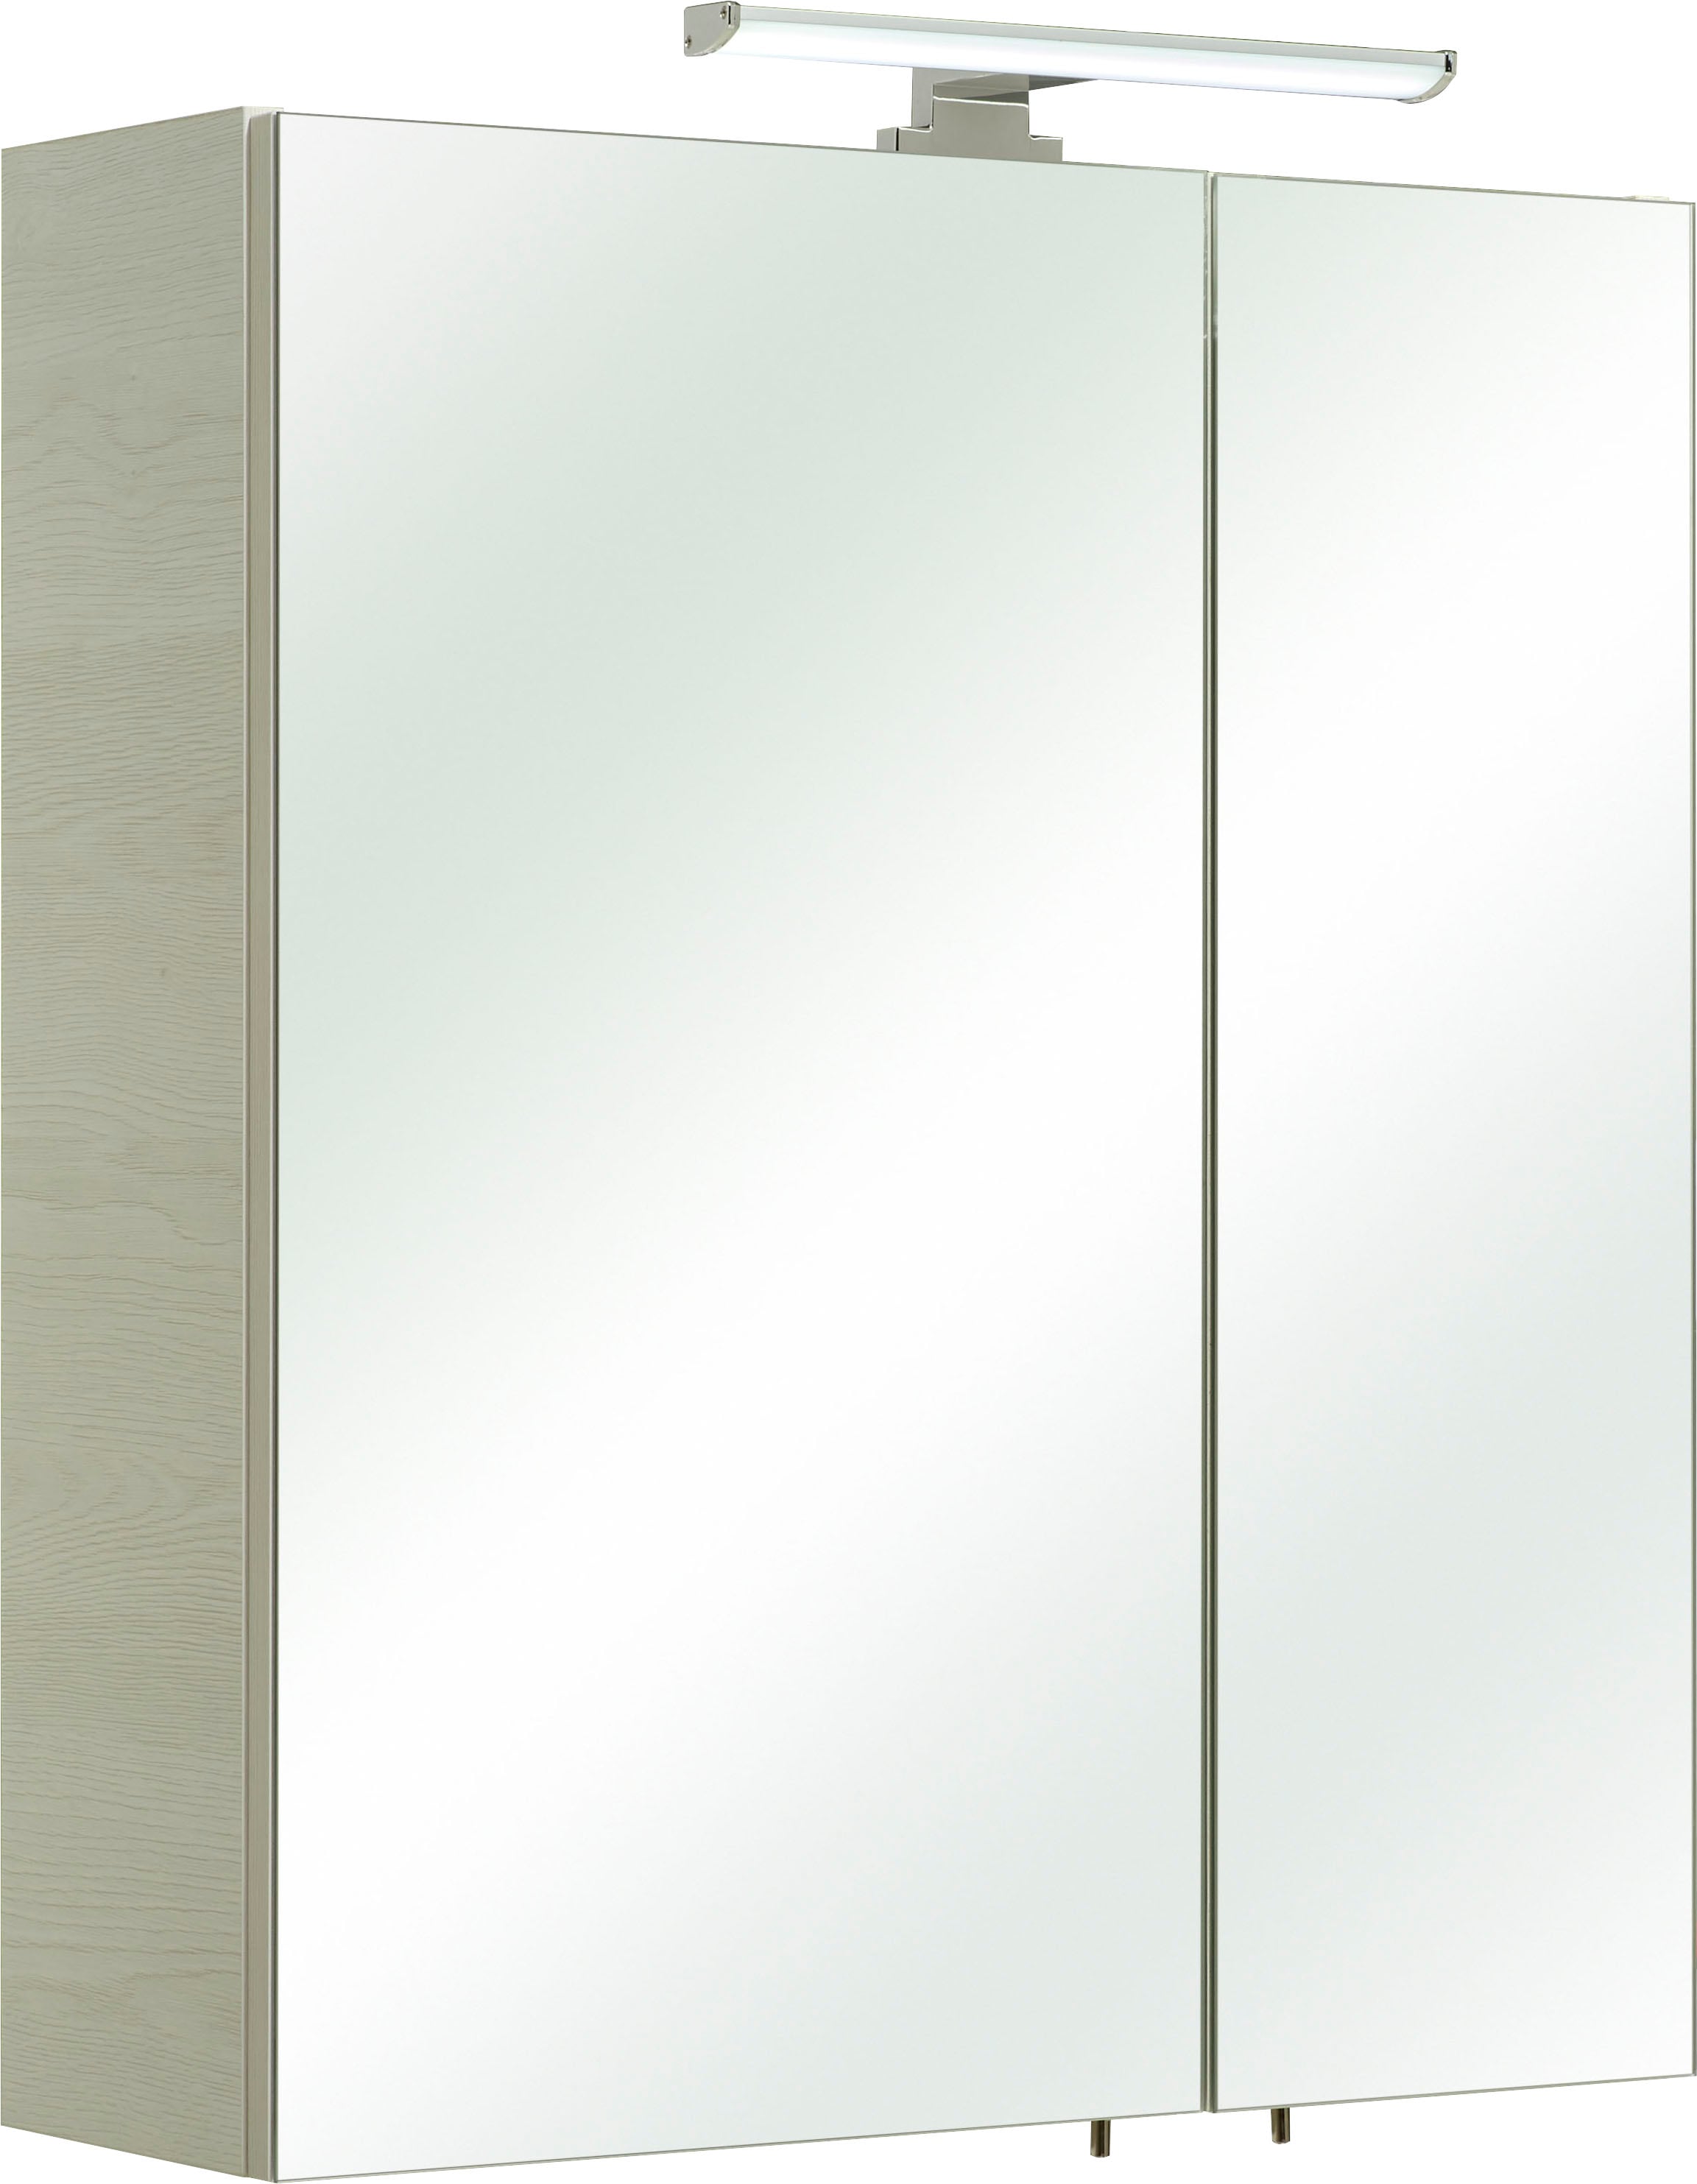 PELIPAL Spiegelschrank "Quickset 936", Breite 60 cm, 2-türig, LED-Beleuchtung, Schalter-/Steckdosenbox